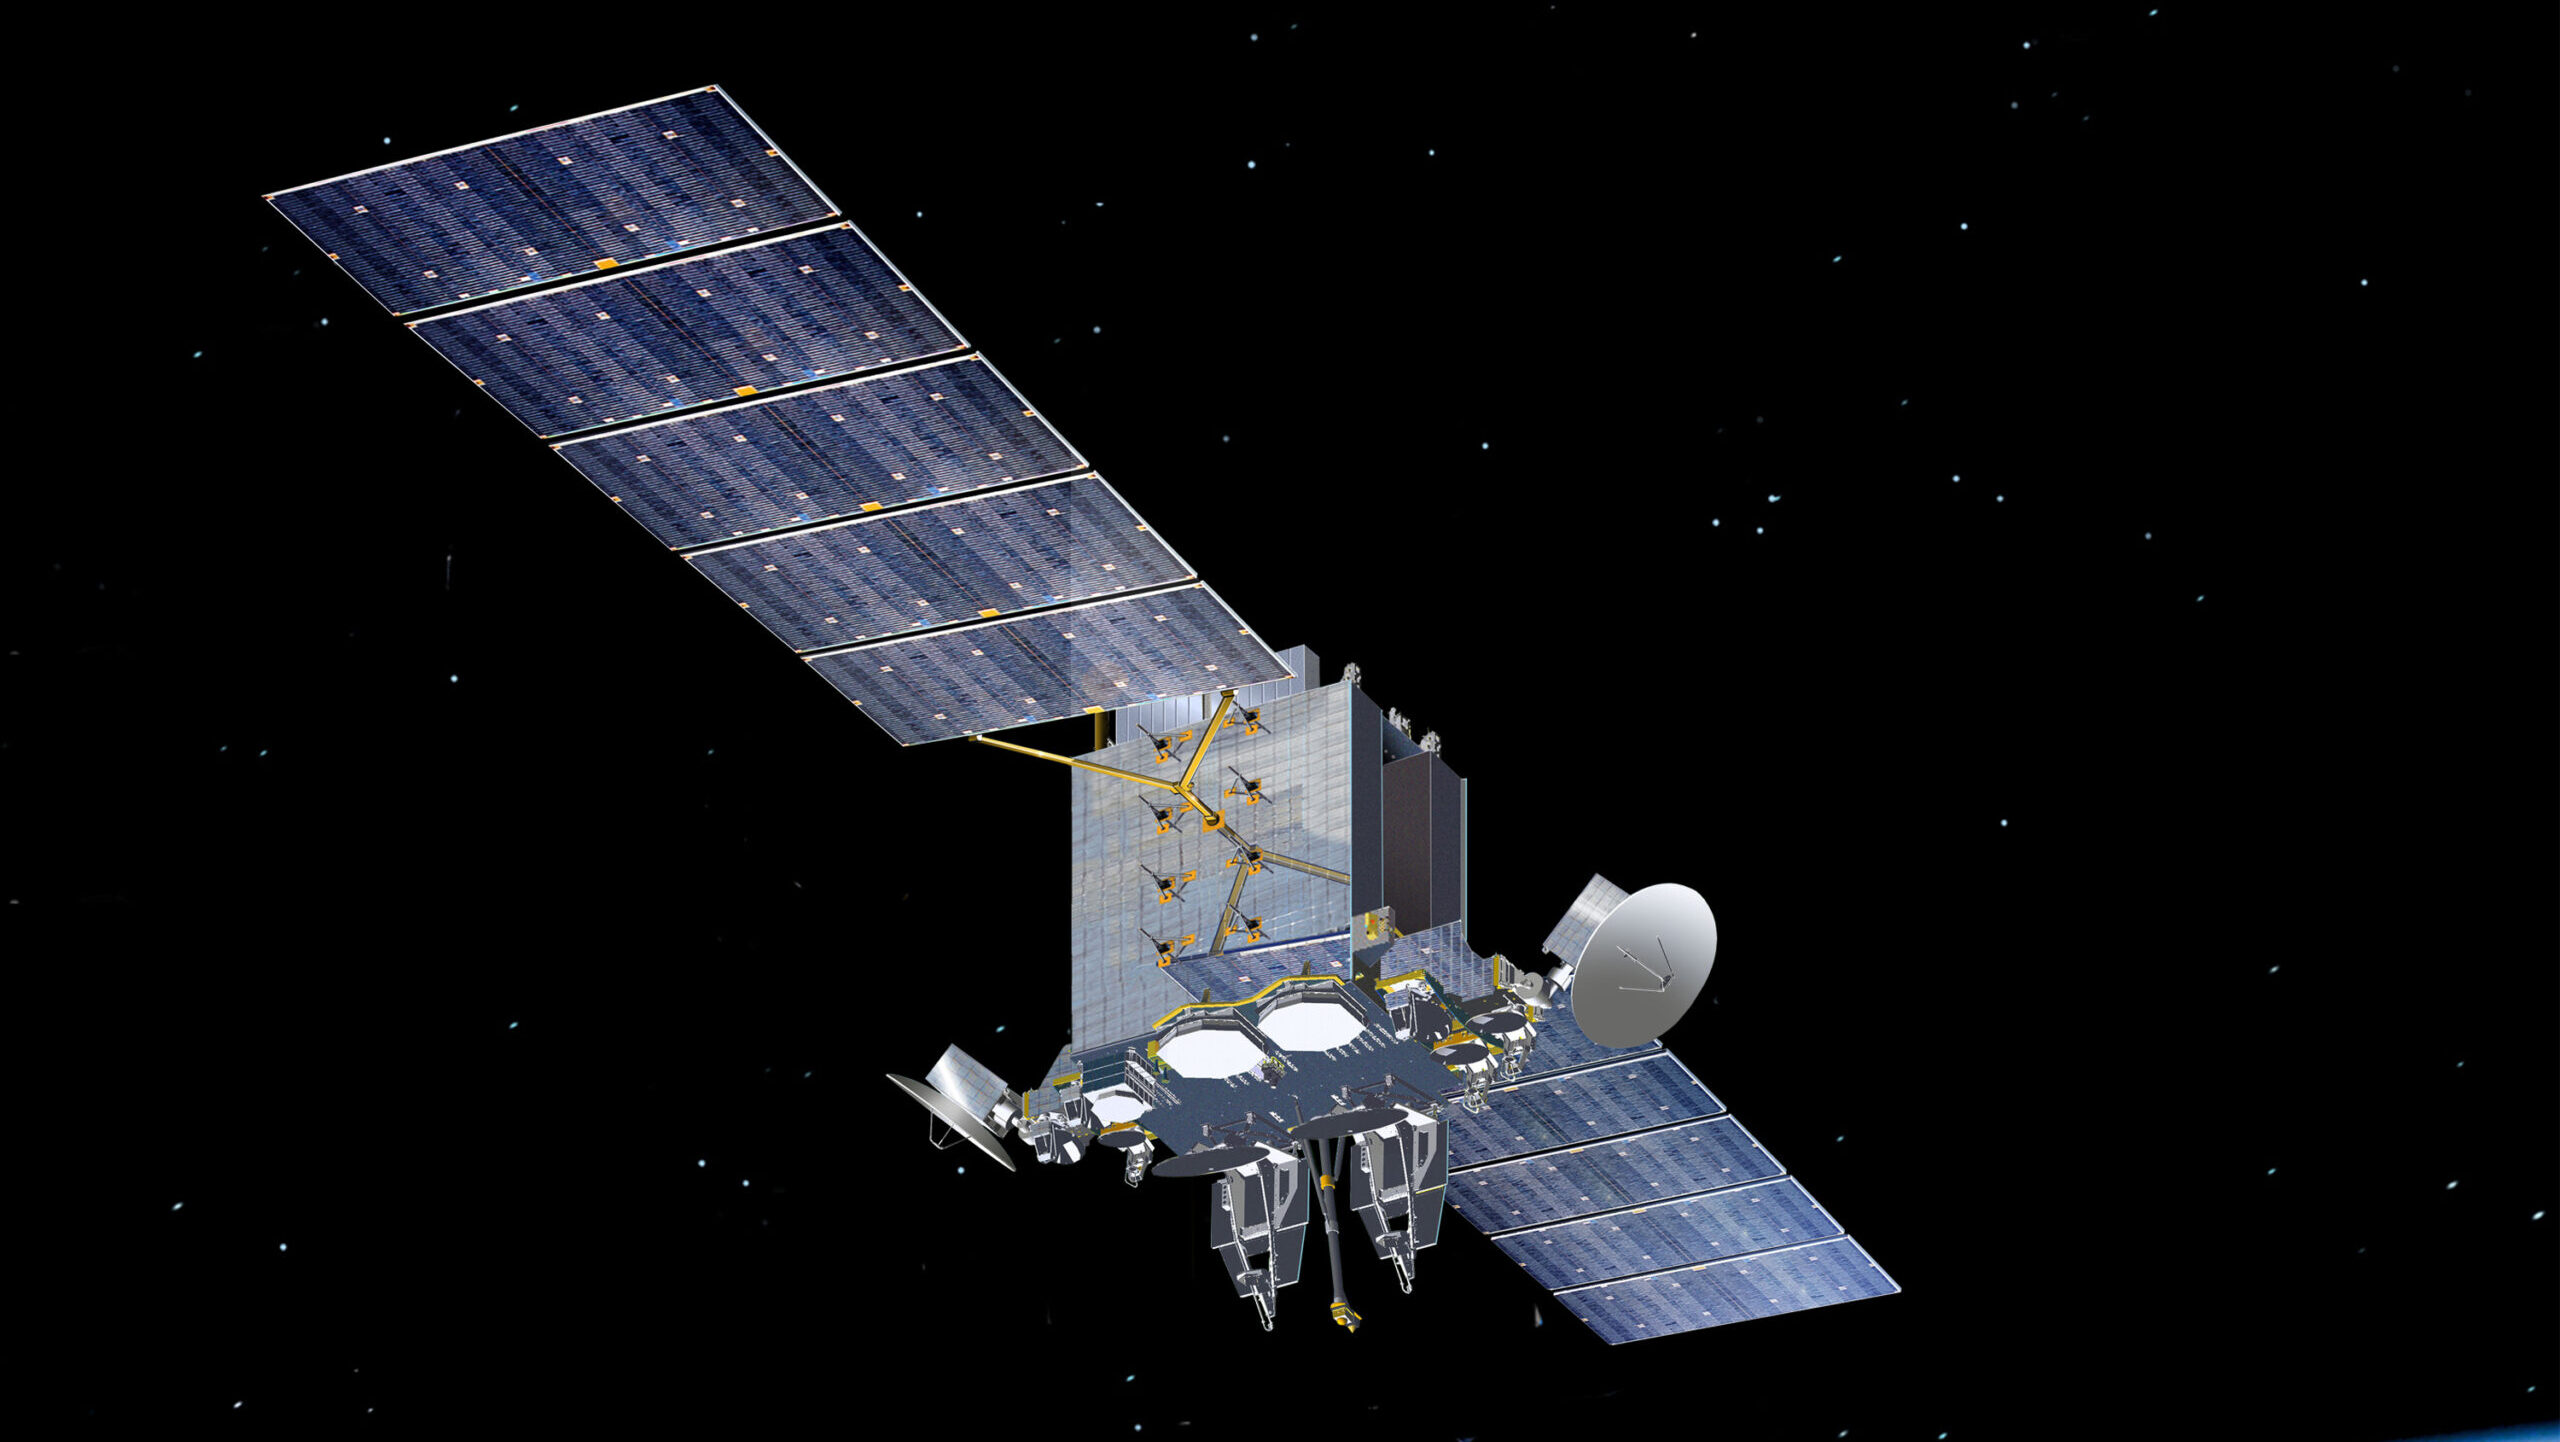 Space Force wants $248M to kickstart new jam-proof SATCOM constellation